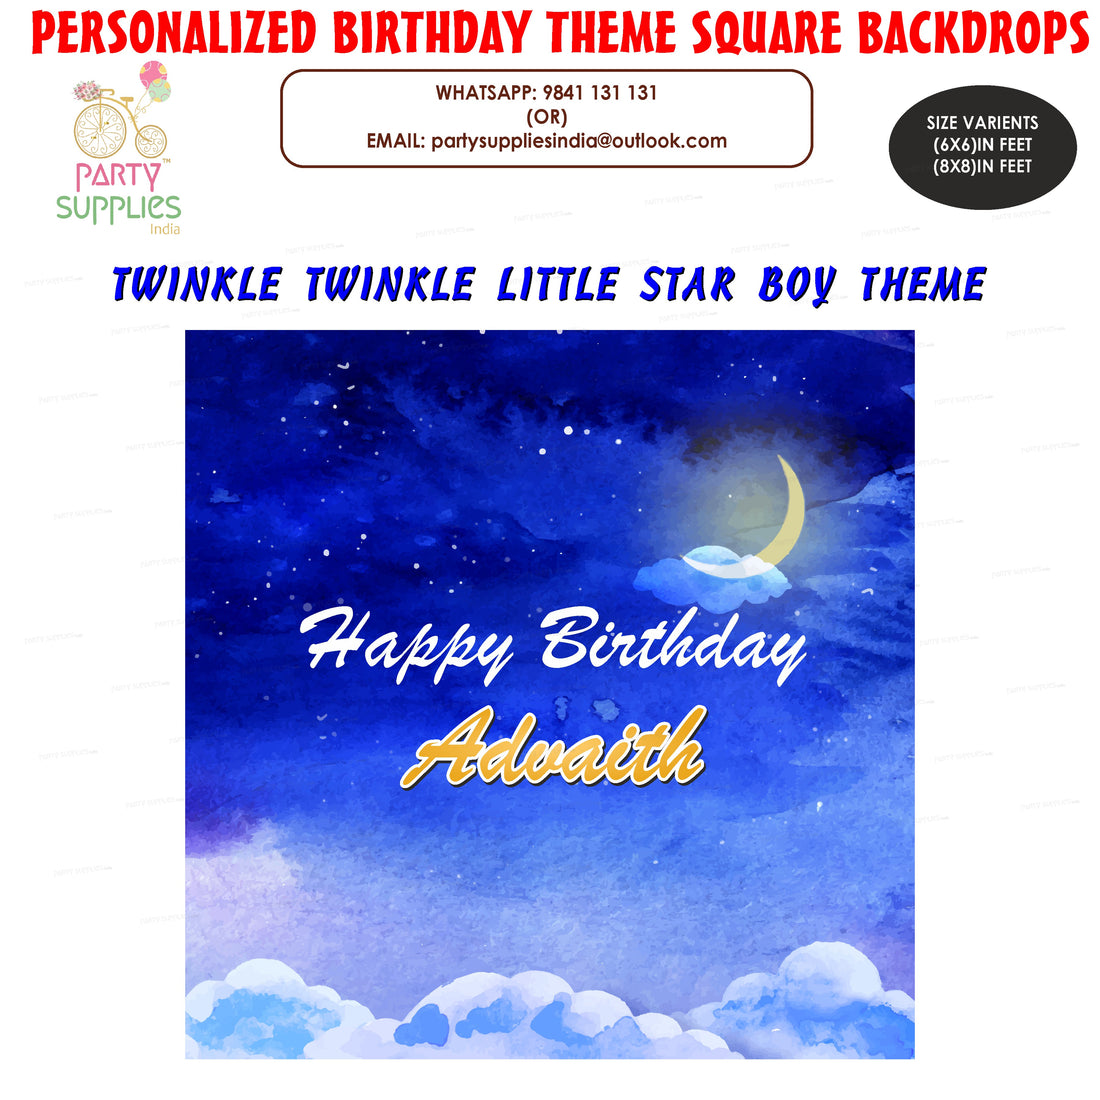 PSI Twinkle Twinkle Little Star Boy Theme Square Backdrop